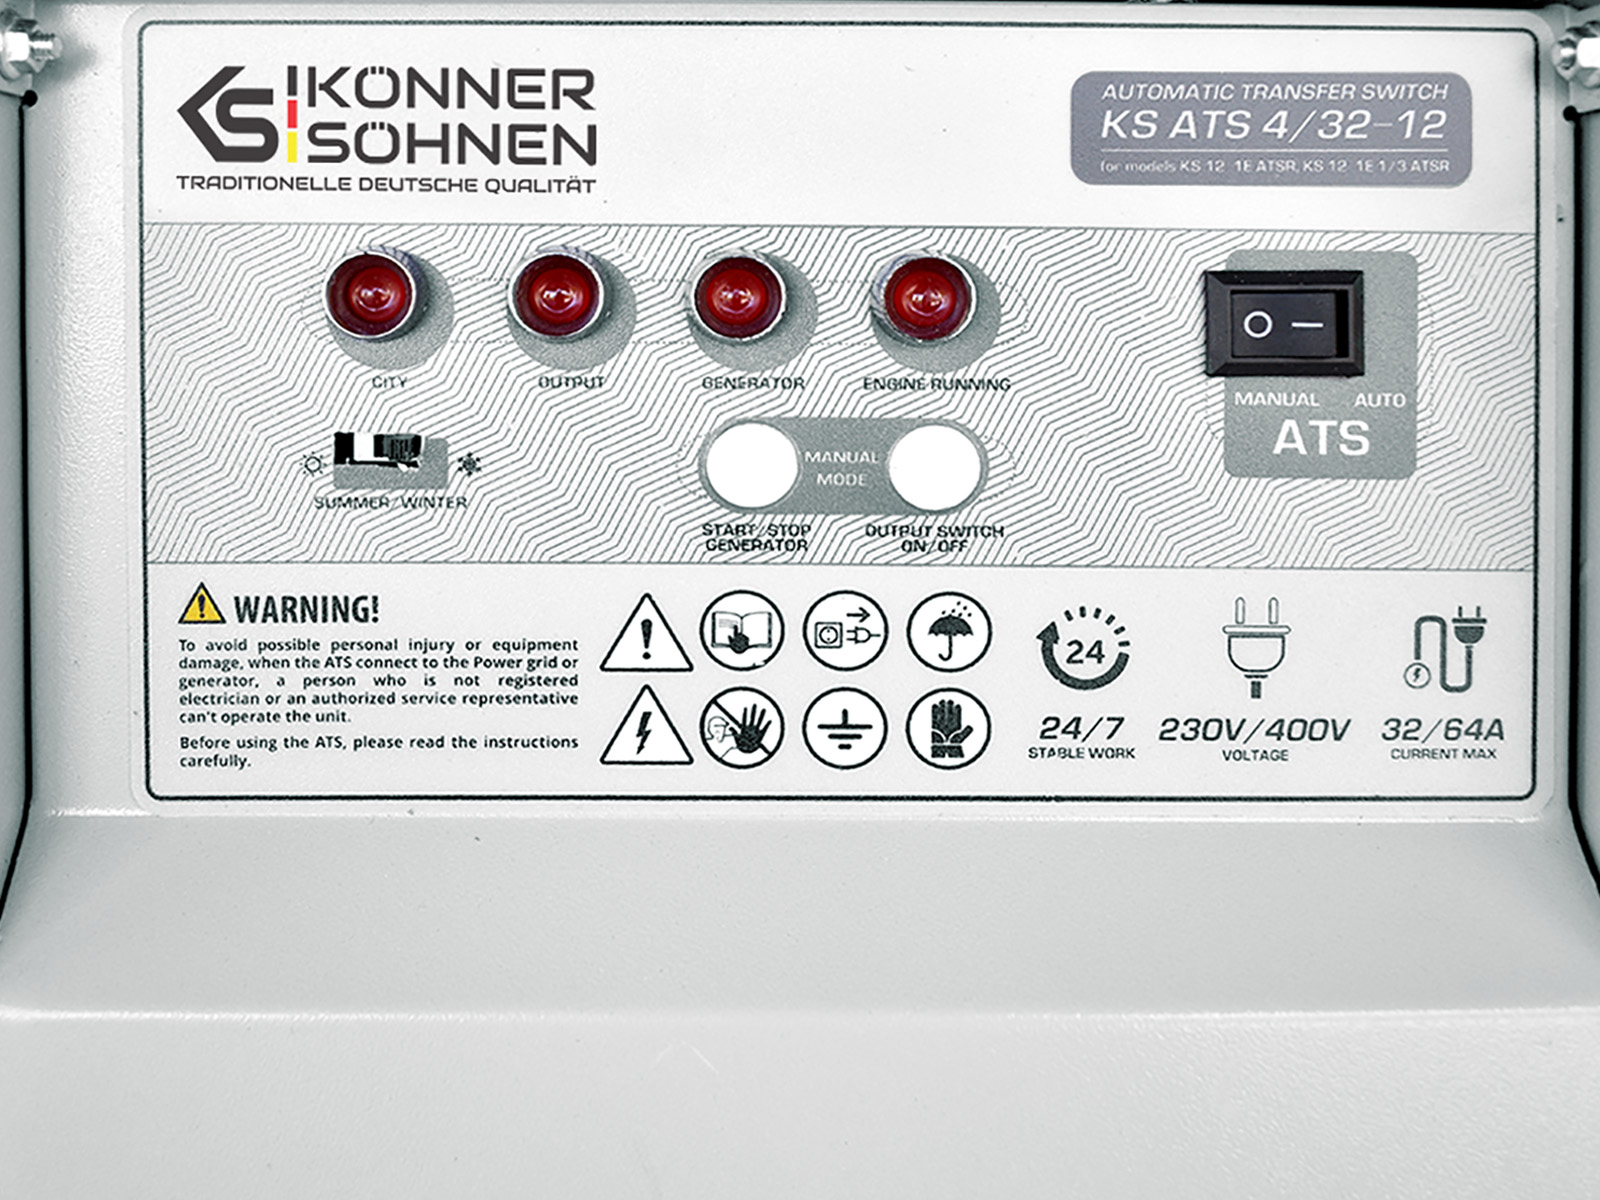 Automatic Transfer Switch KS ATS 4/32-12